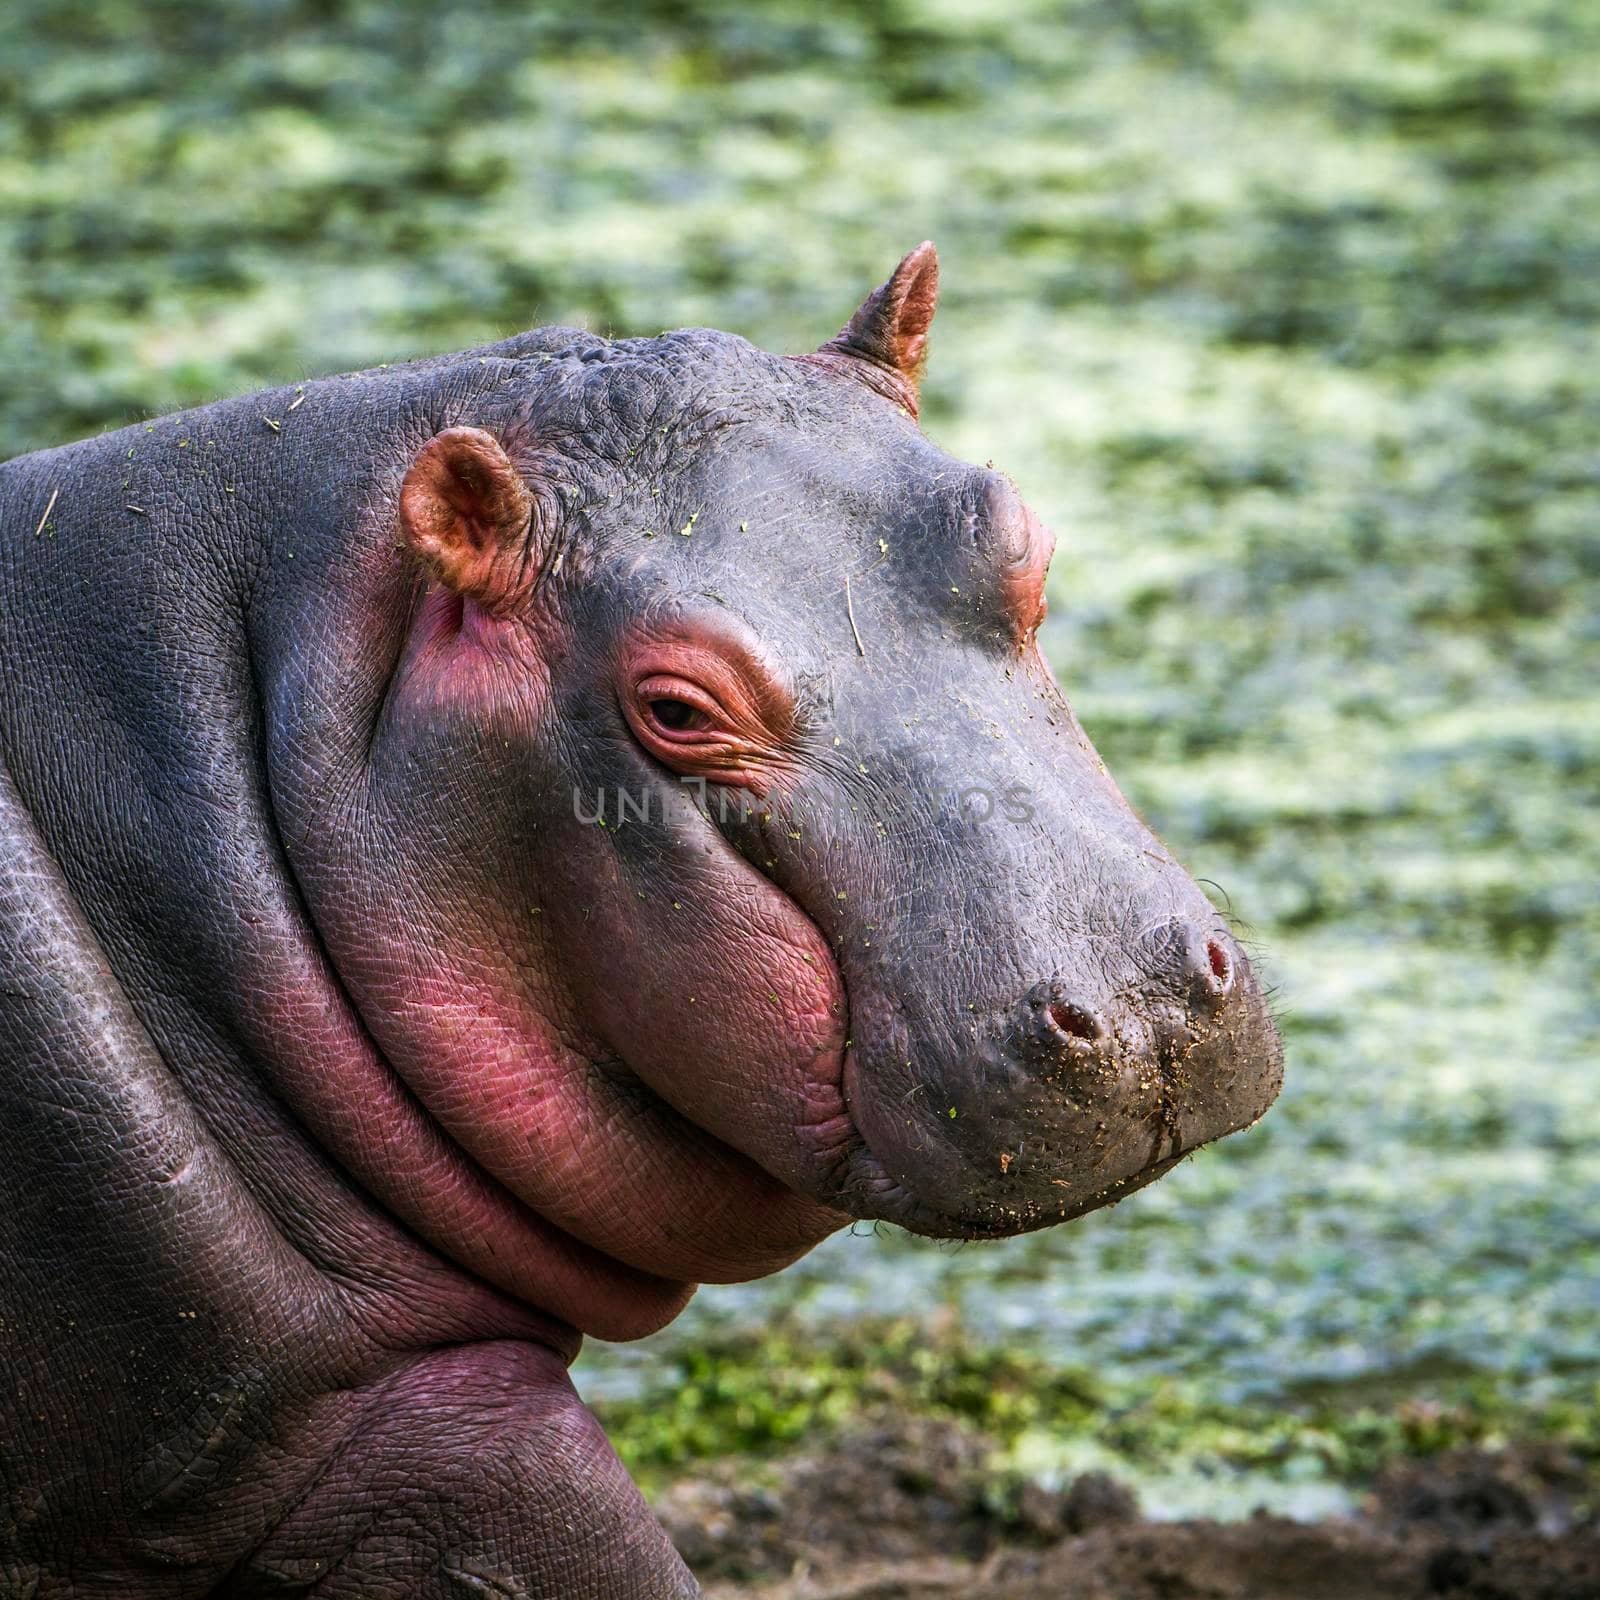 Specie Hippopotamus amphibius family of Hippopotamidae